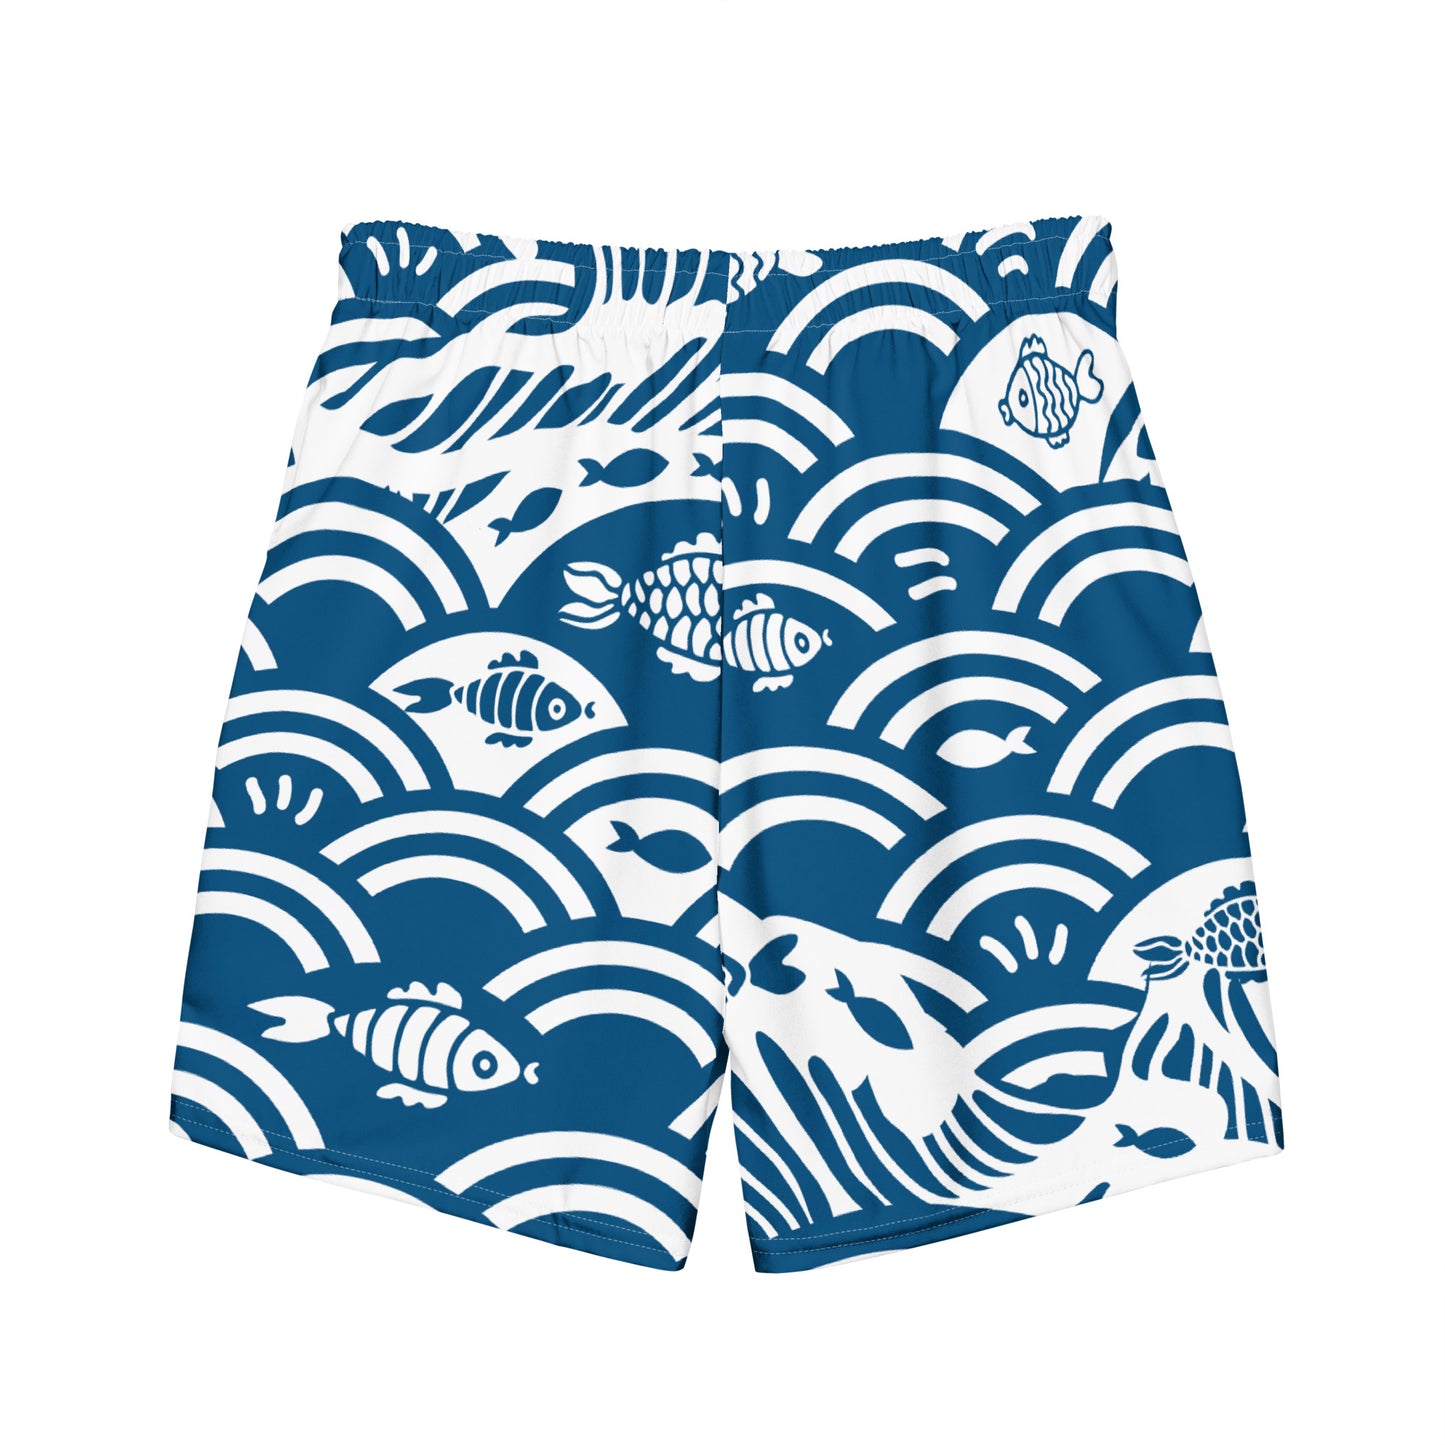 FISHY - Men's swim trunks